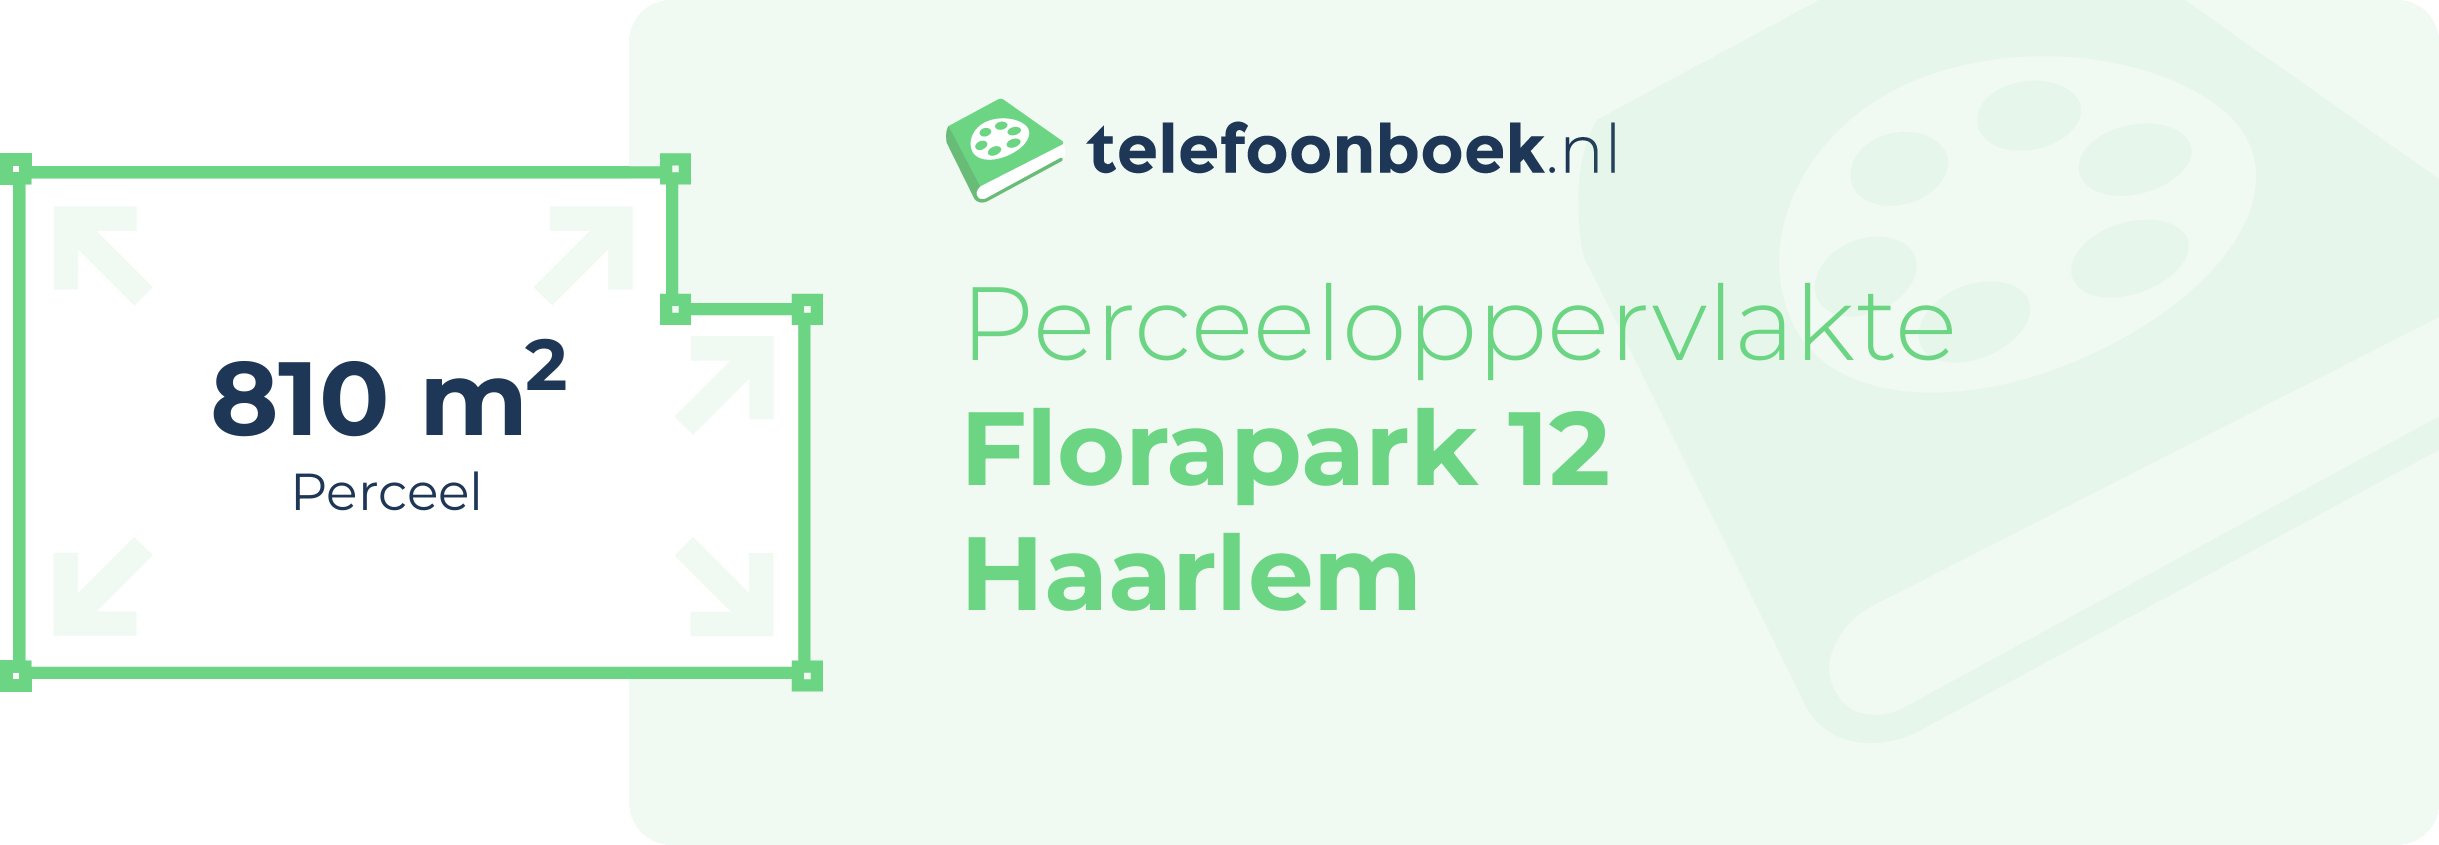 Perceeloppervlakte Florapark 12 Haarlem